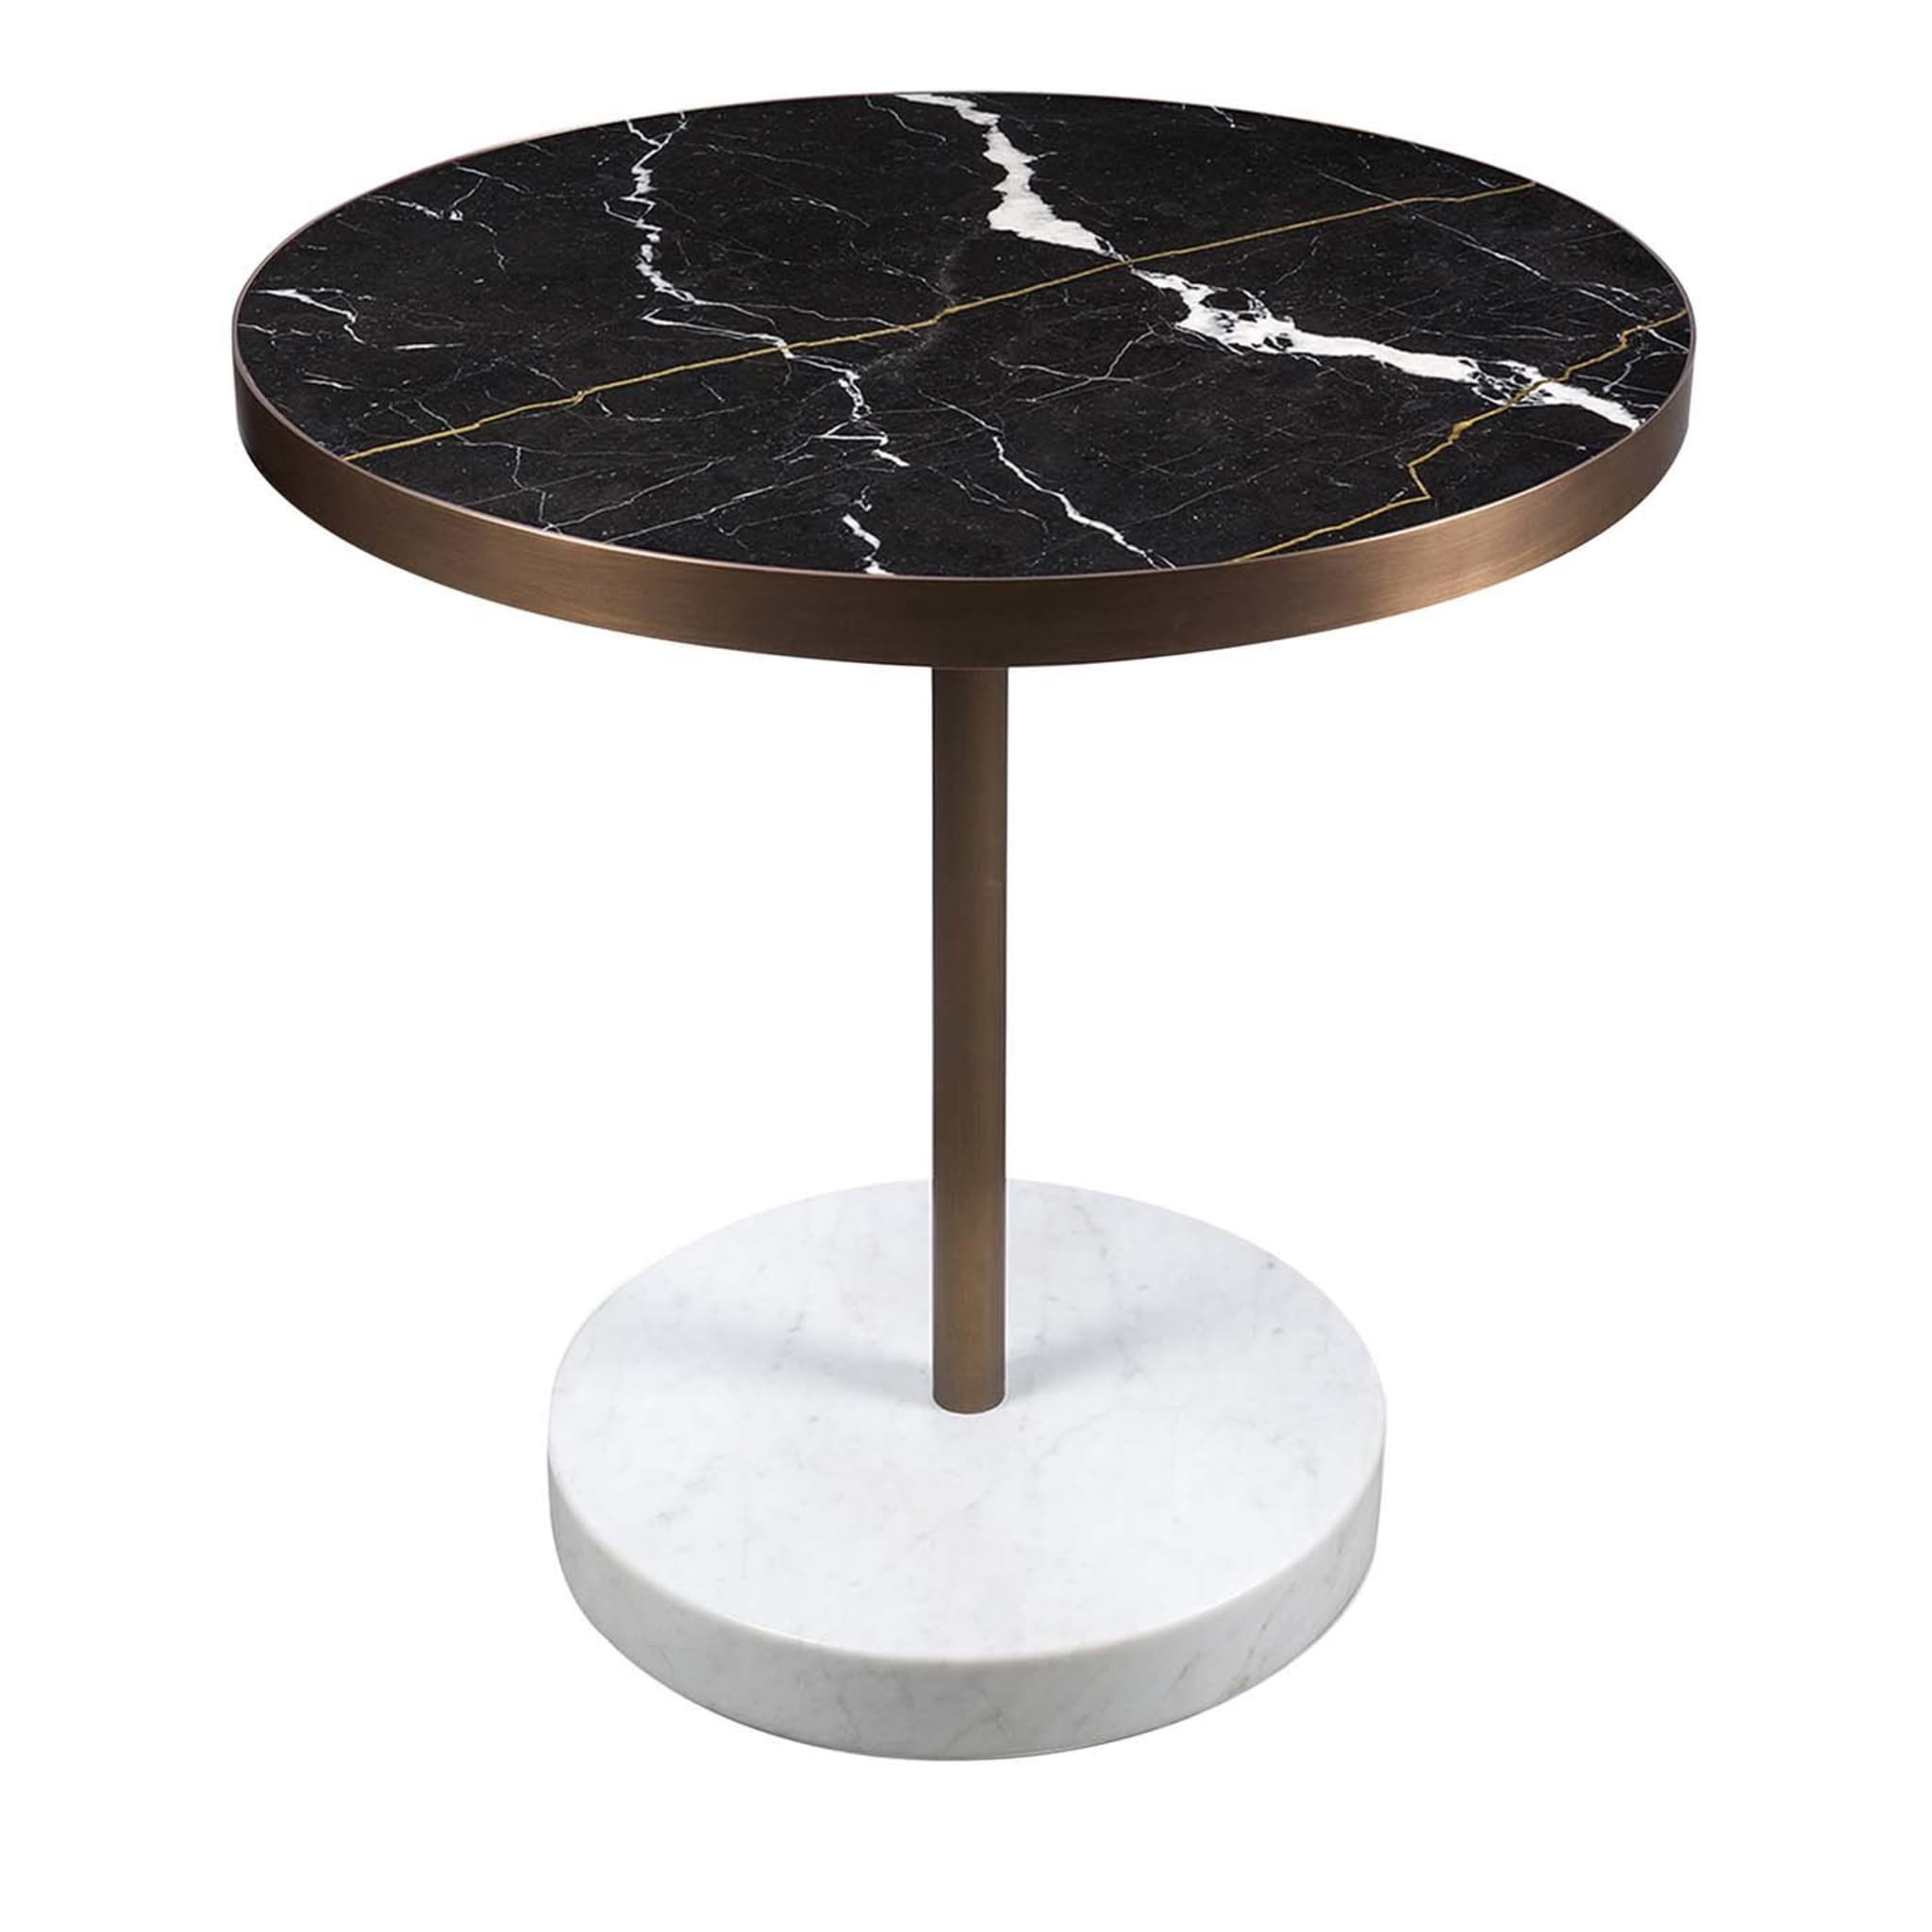 Rene Bistro Table in Nero Marquinia Marble by Piero Lissoni - Main view